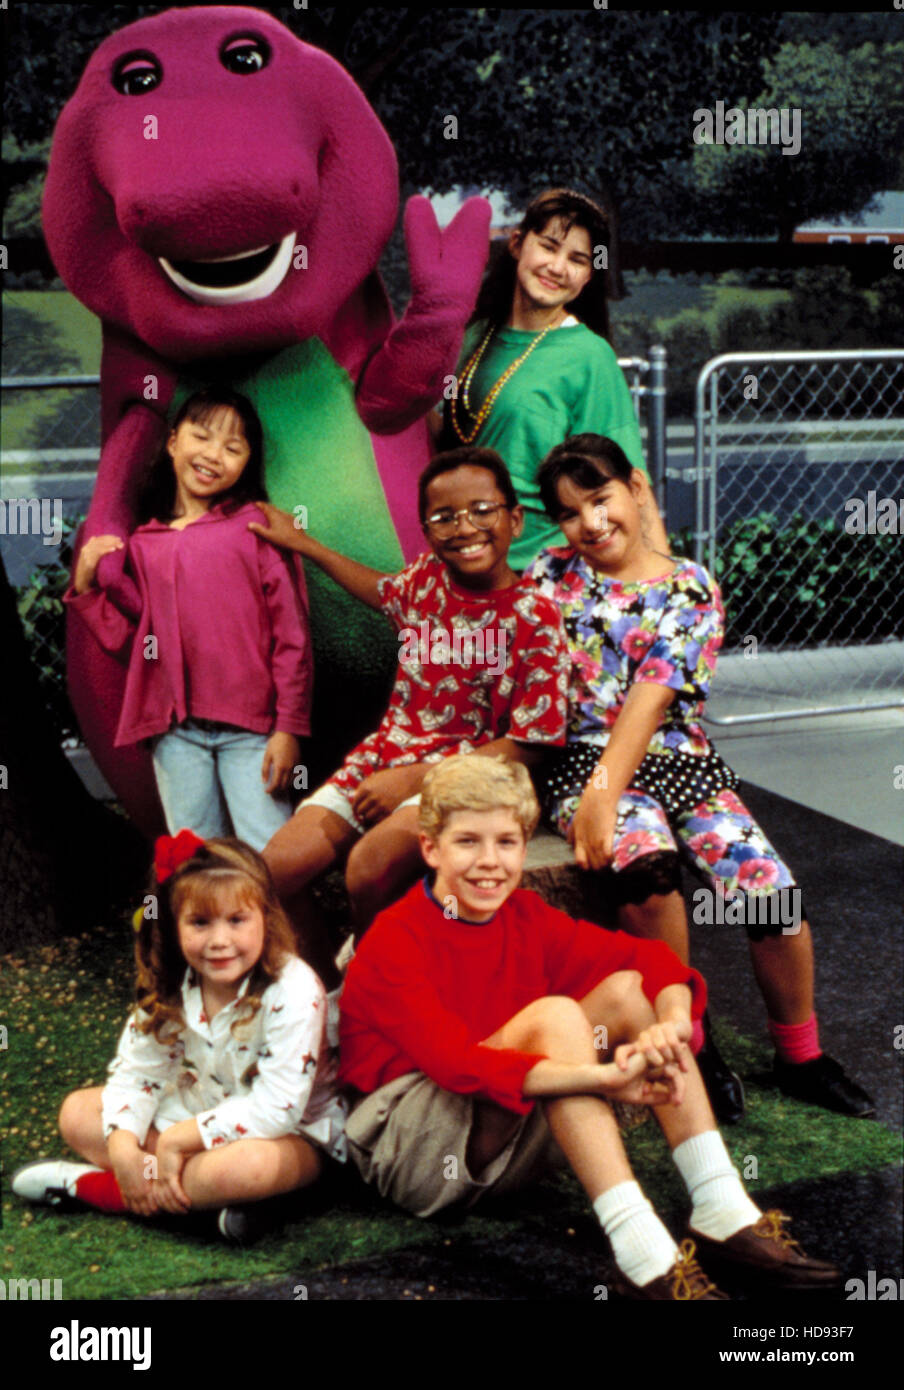 BARNEY & FRIENDS, 1992- Stock Photo